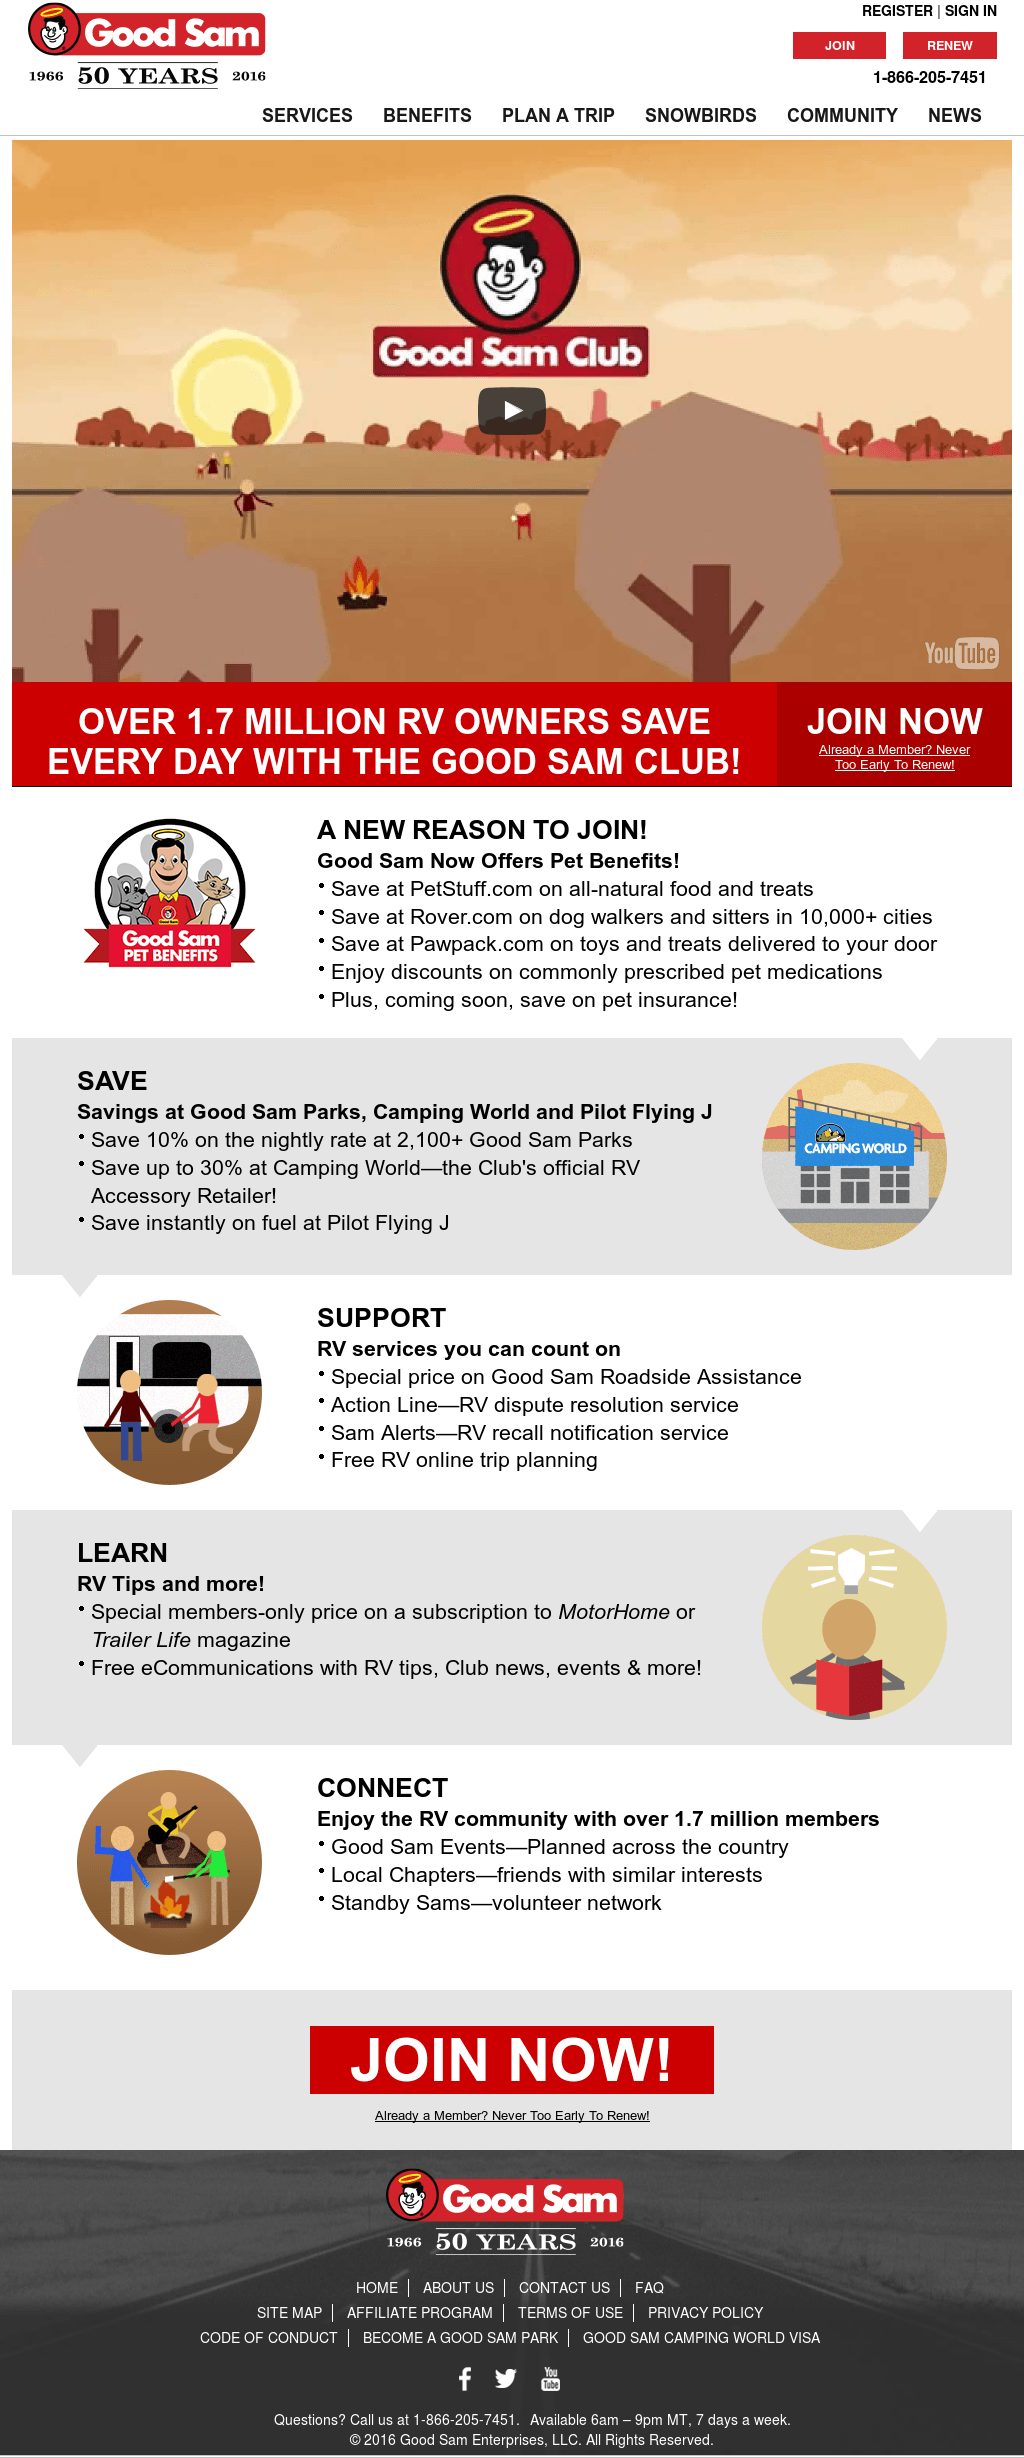 Good Sam Club Logo - Good Sam Club Competitors, Revenue and Employees Company Profile